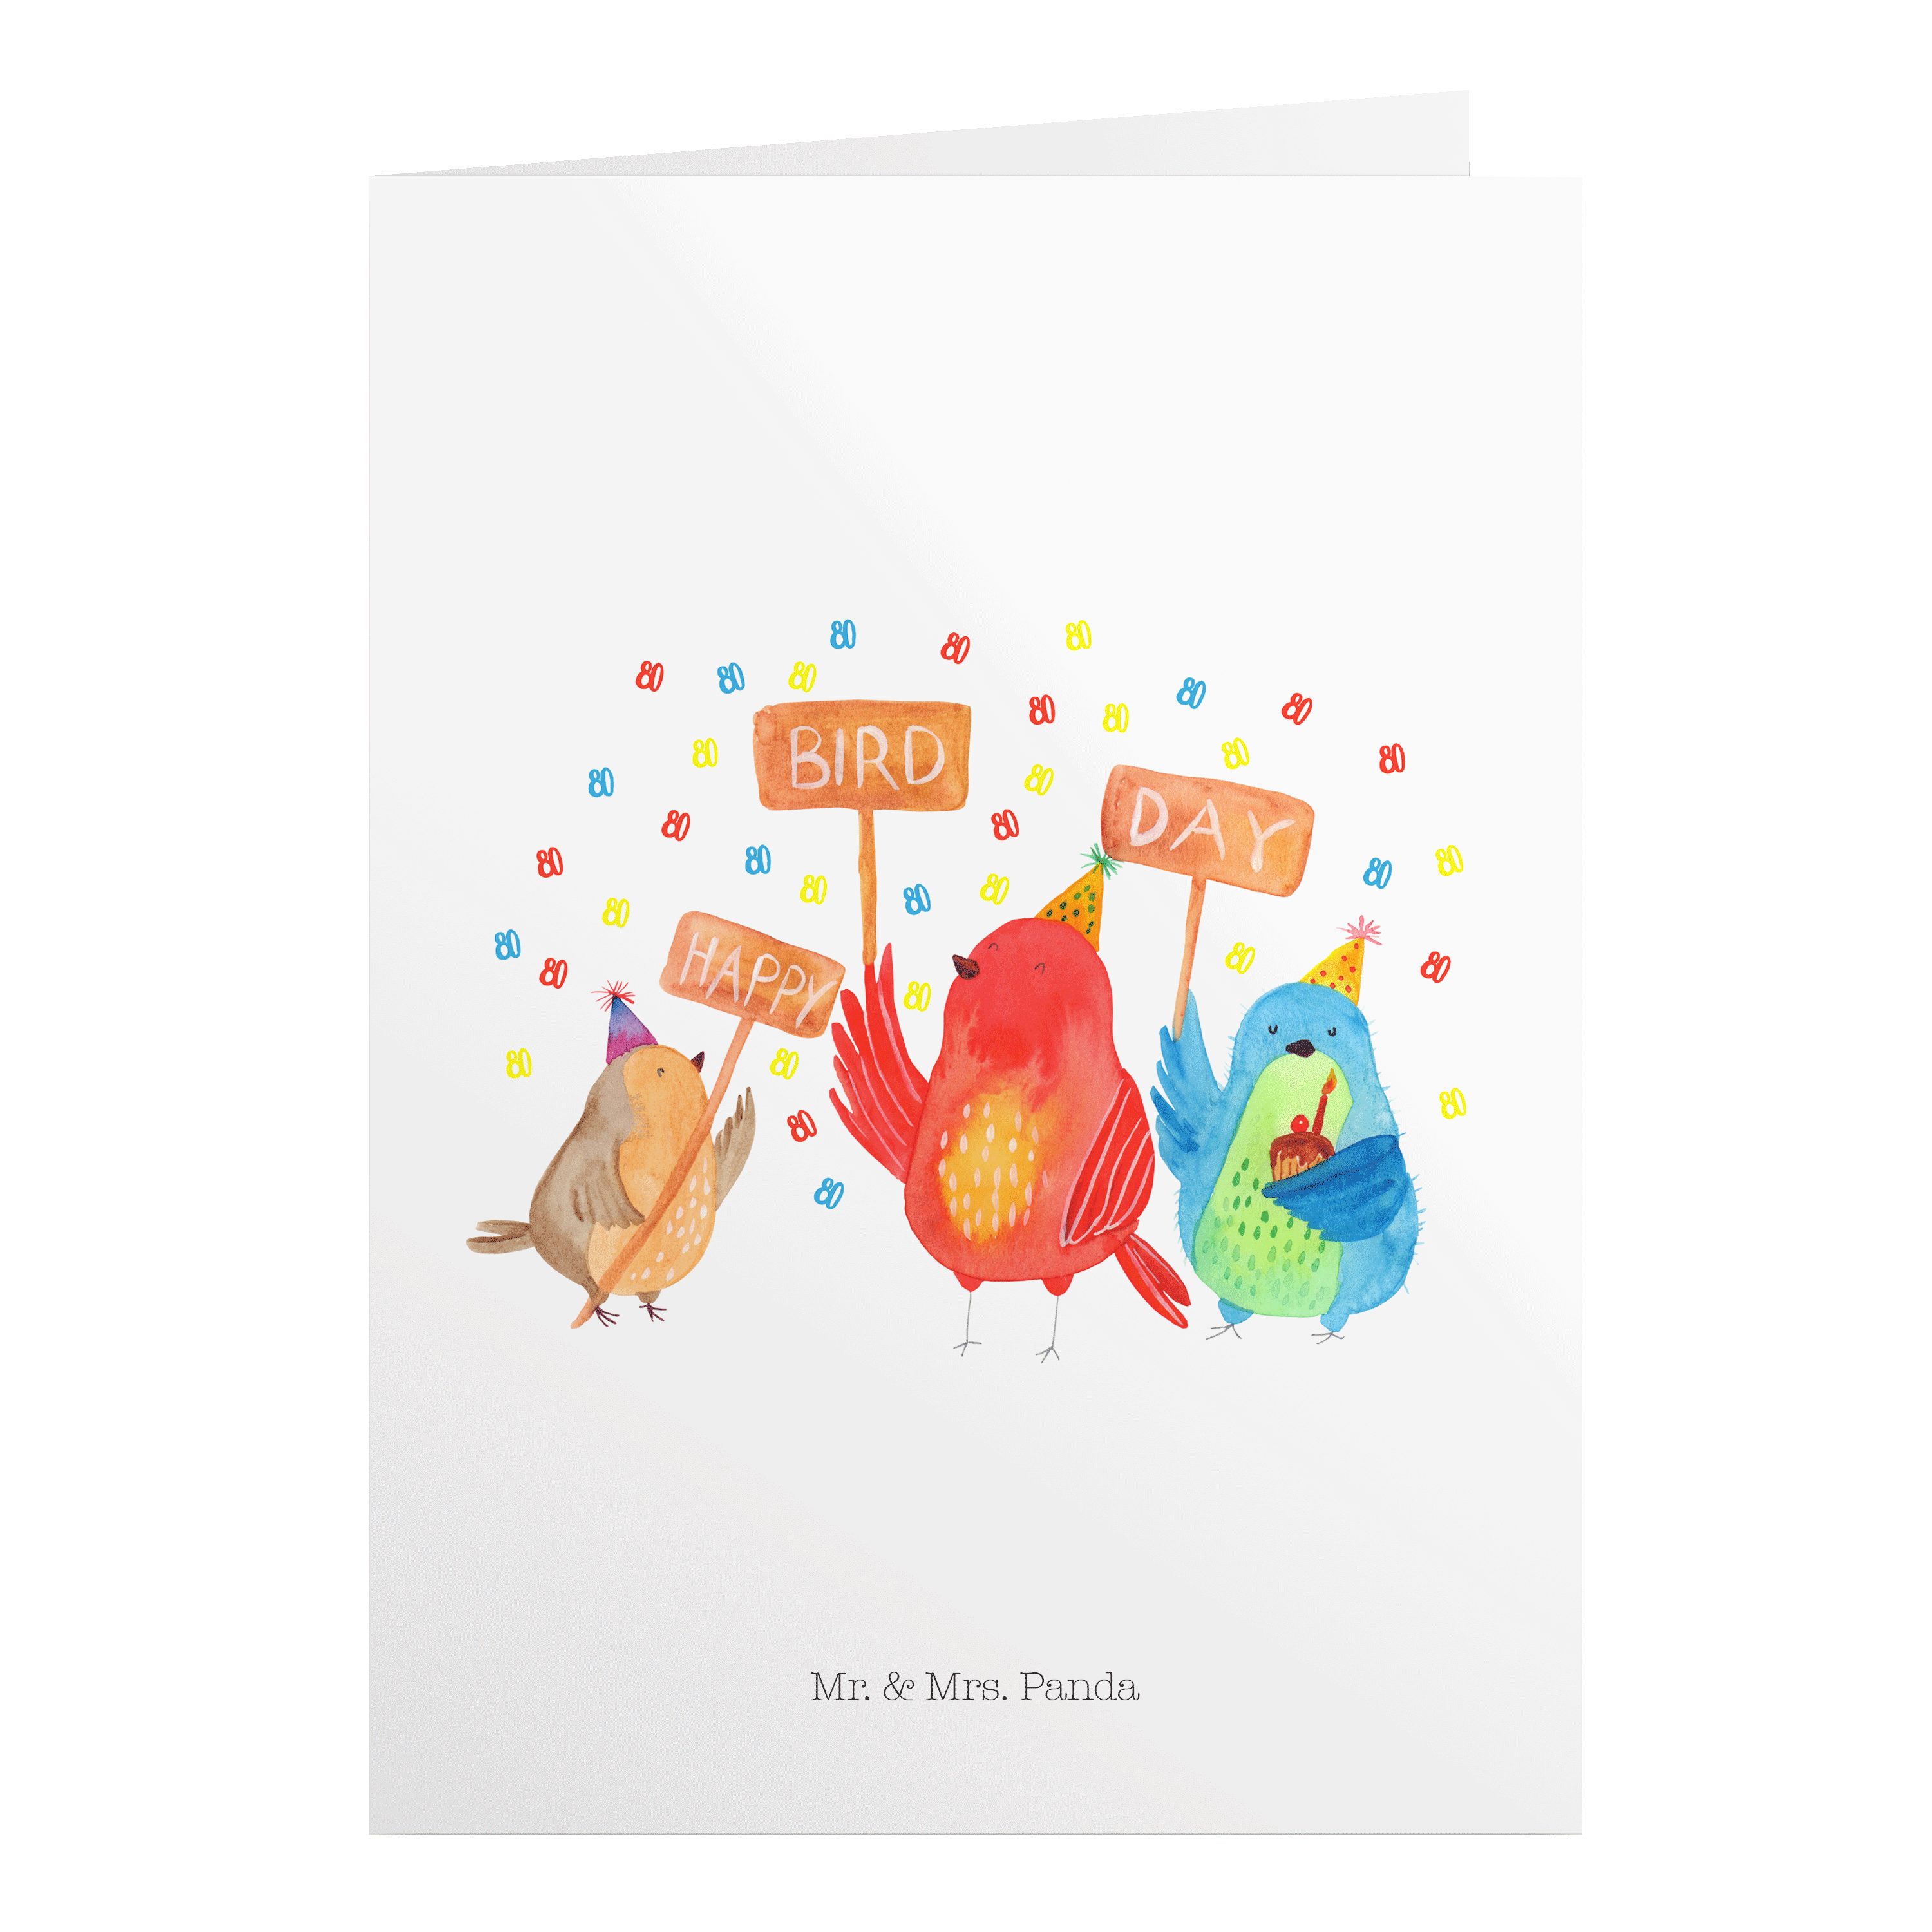 Mr. & Mrs. Panda Geburtstagskarten 80. Geburtstag Happy Bird Day - Weiß - Geschenk, Geburtstagsgeschenk